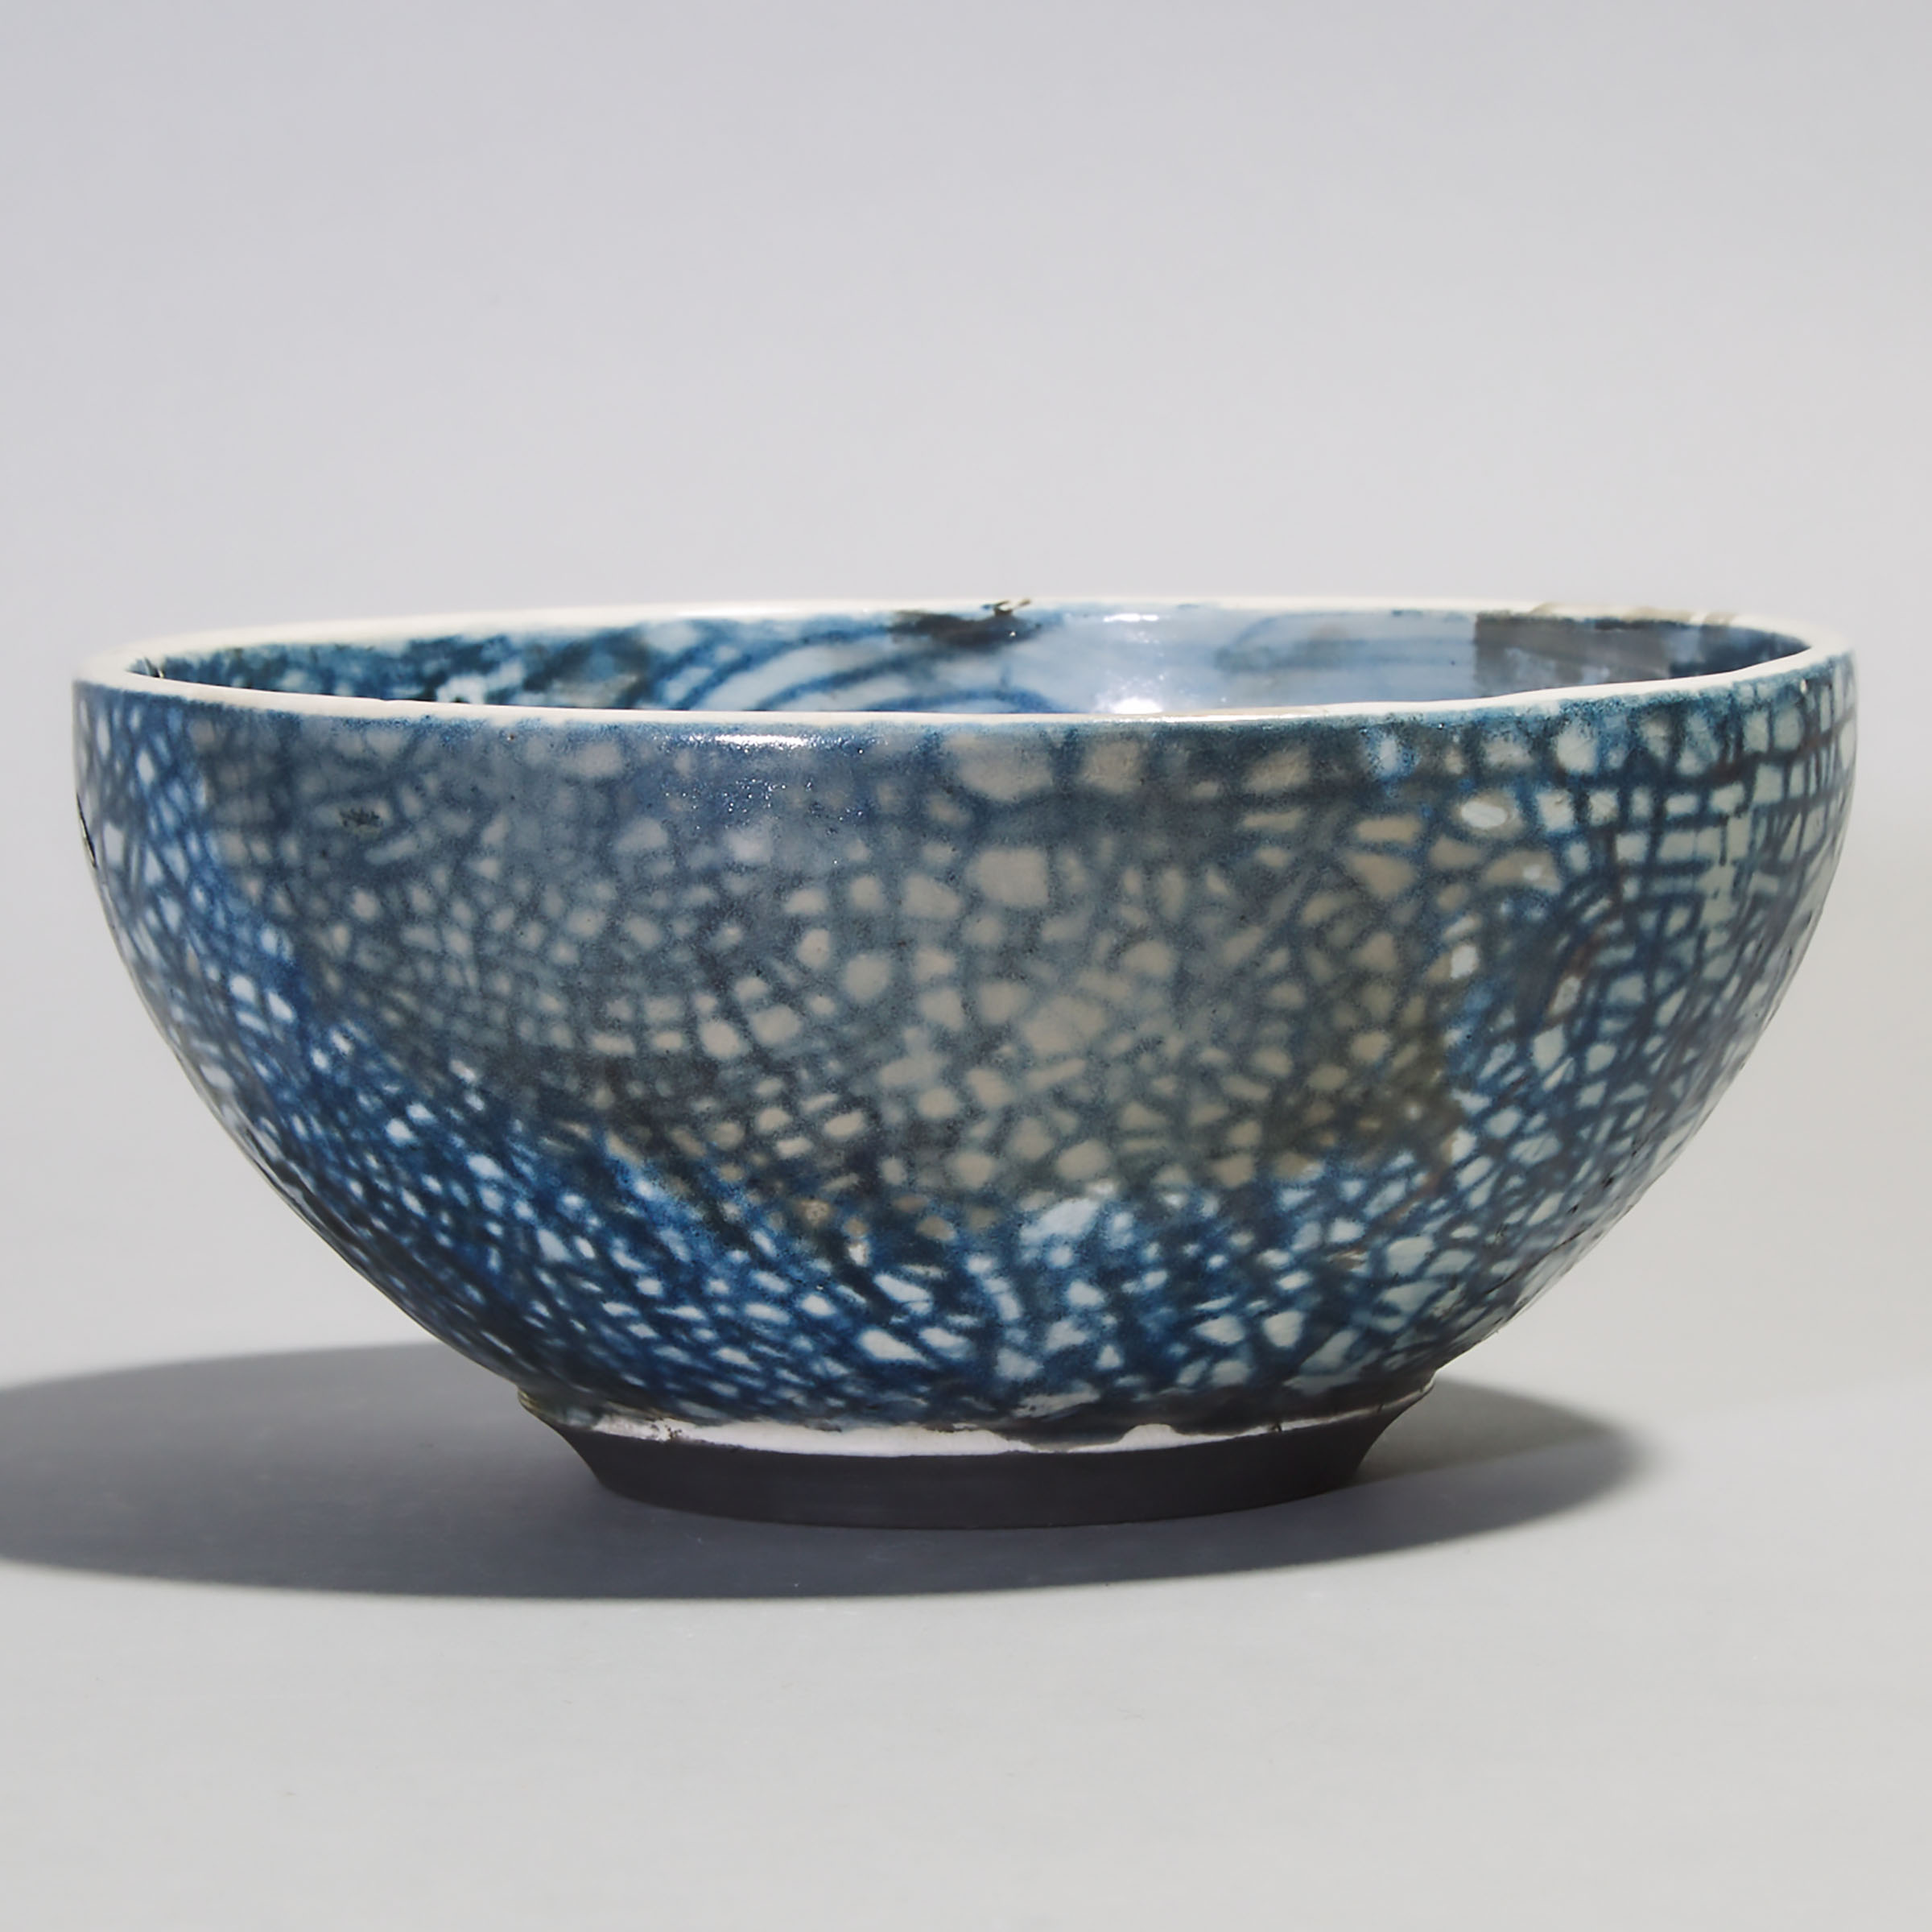 Susan Wintrop (Canadian, b.1953), Blue Crackle Glazed Bowl, c.1995